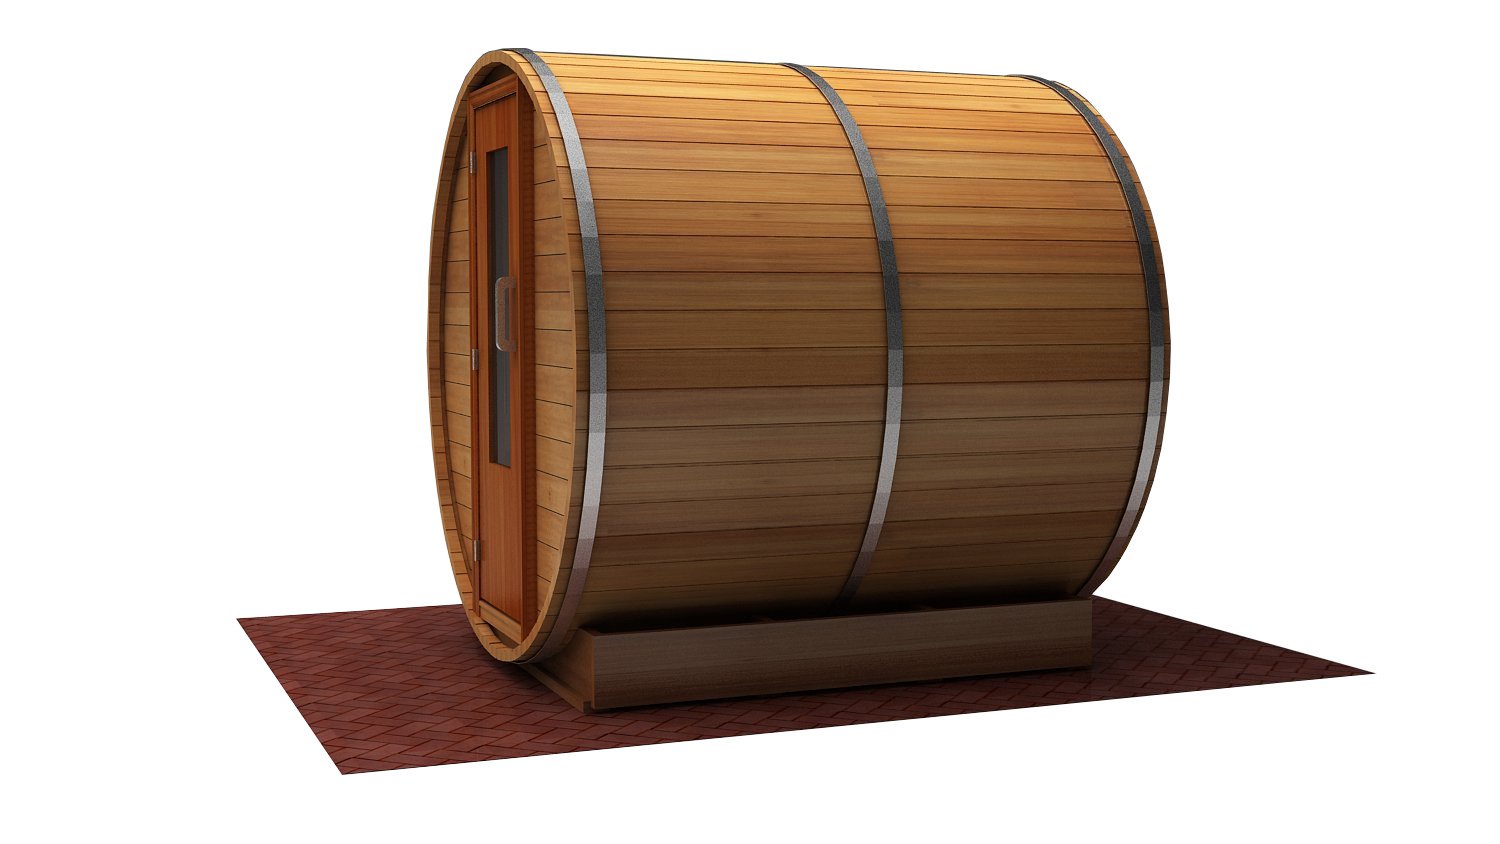 Barrel Sauna Kit - Outdoor Barrel Sauna Room 7' x 12' - Electric Heater with Change Room